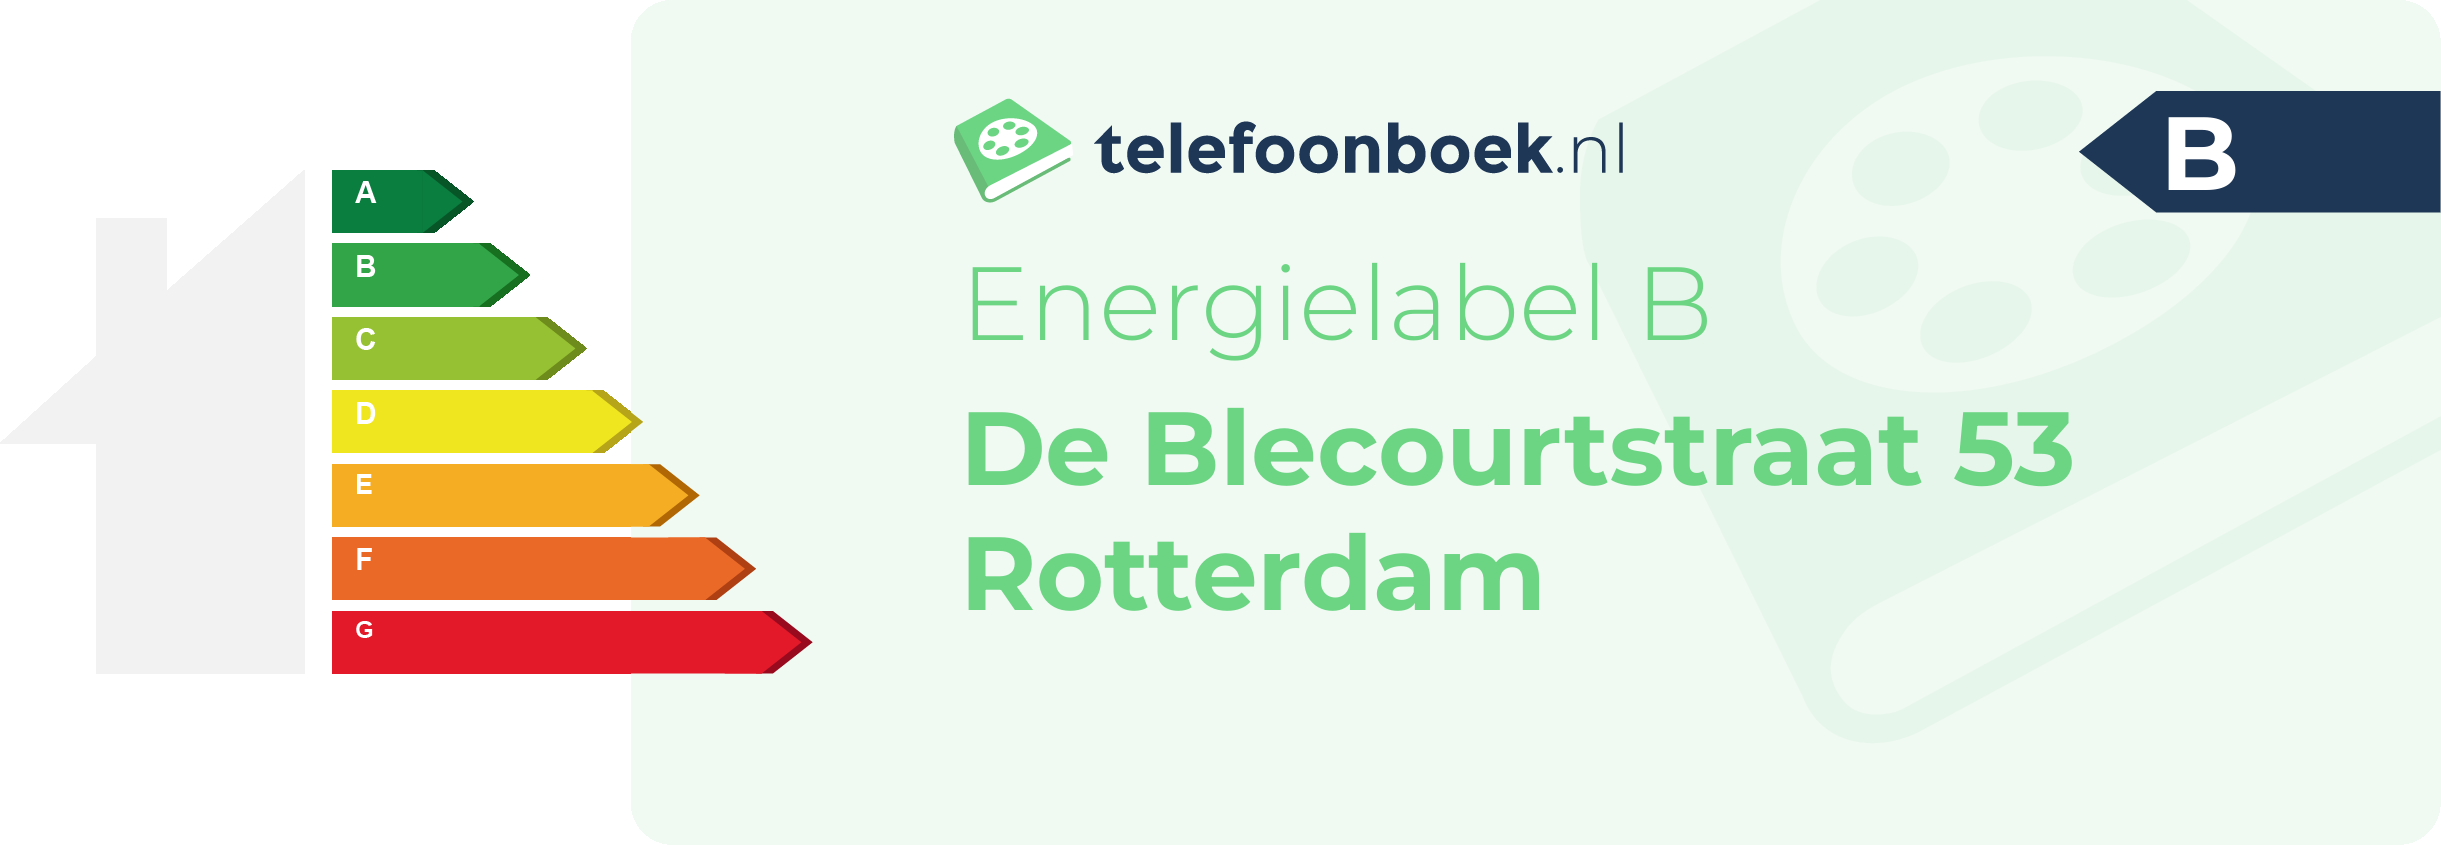 Energielabel De Blecourtstraat 53 Rotterdam